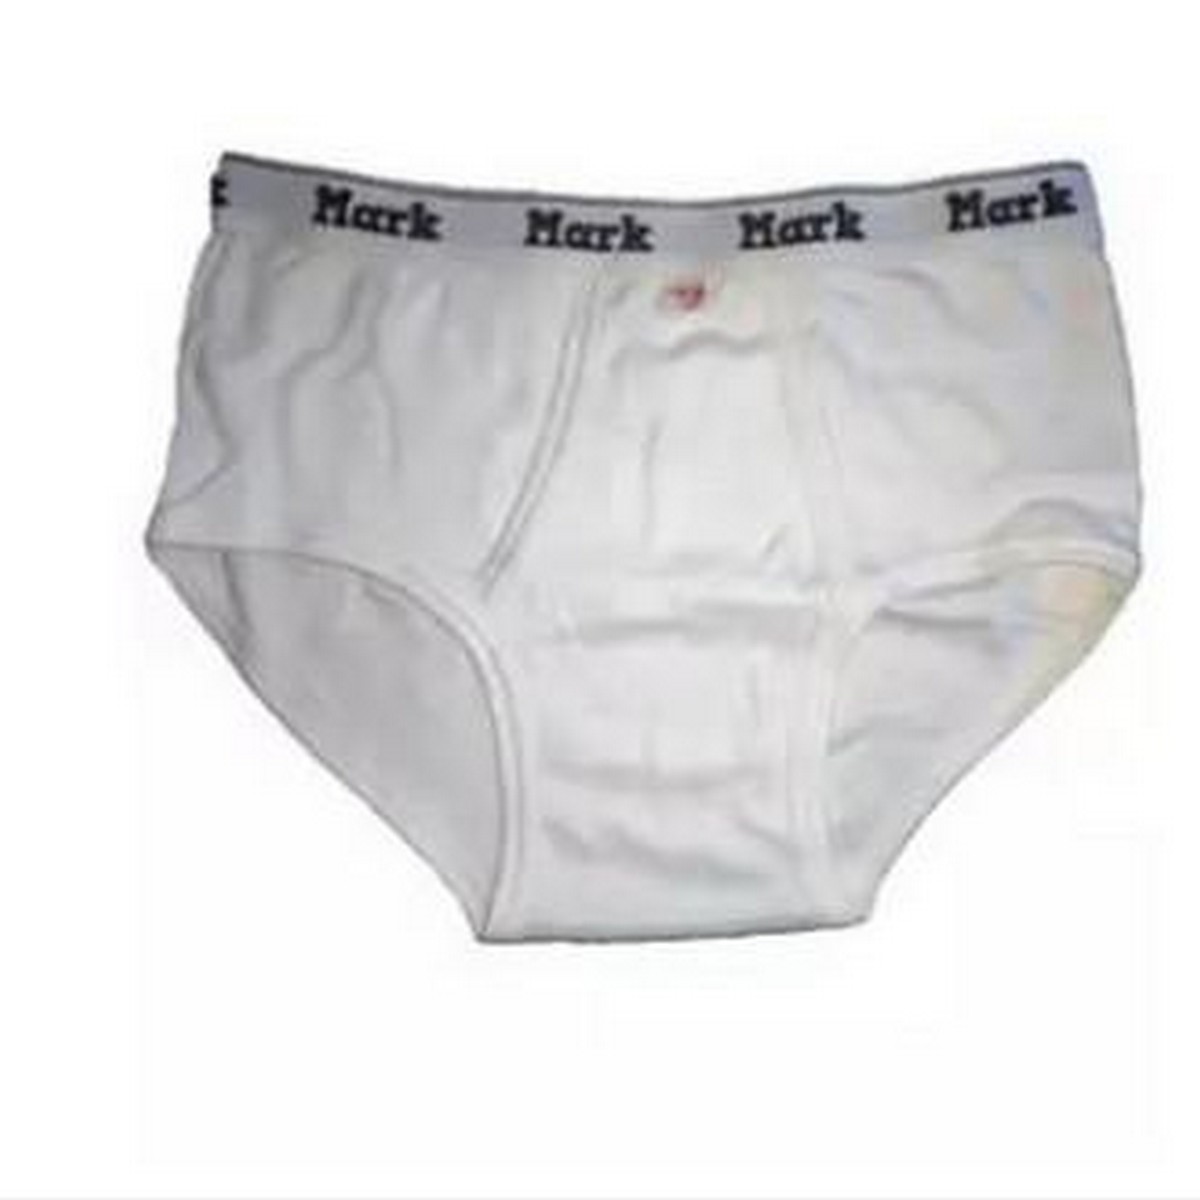 pack of 6-White Soft cotton open elastic underwear for men / Belt Men's underwear  v shape in cotton / brief (high quality)